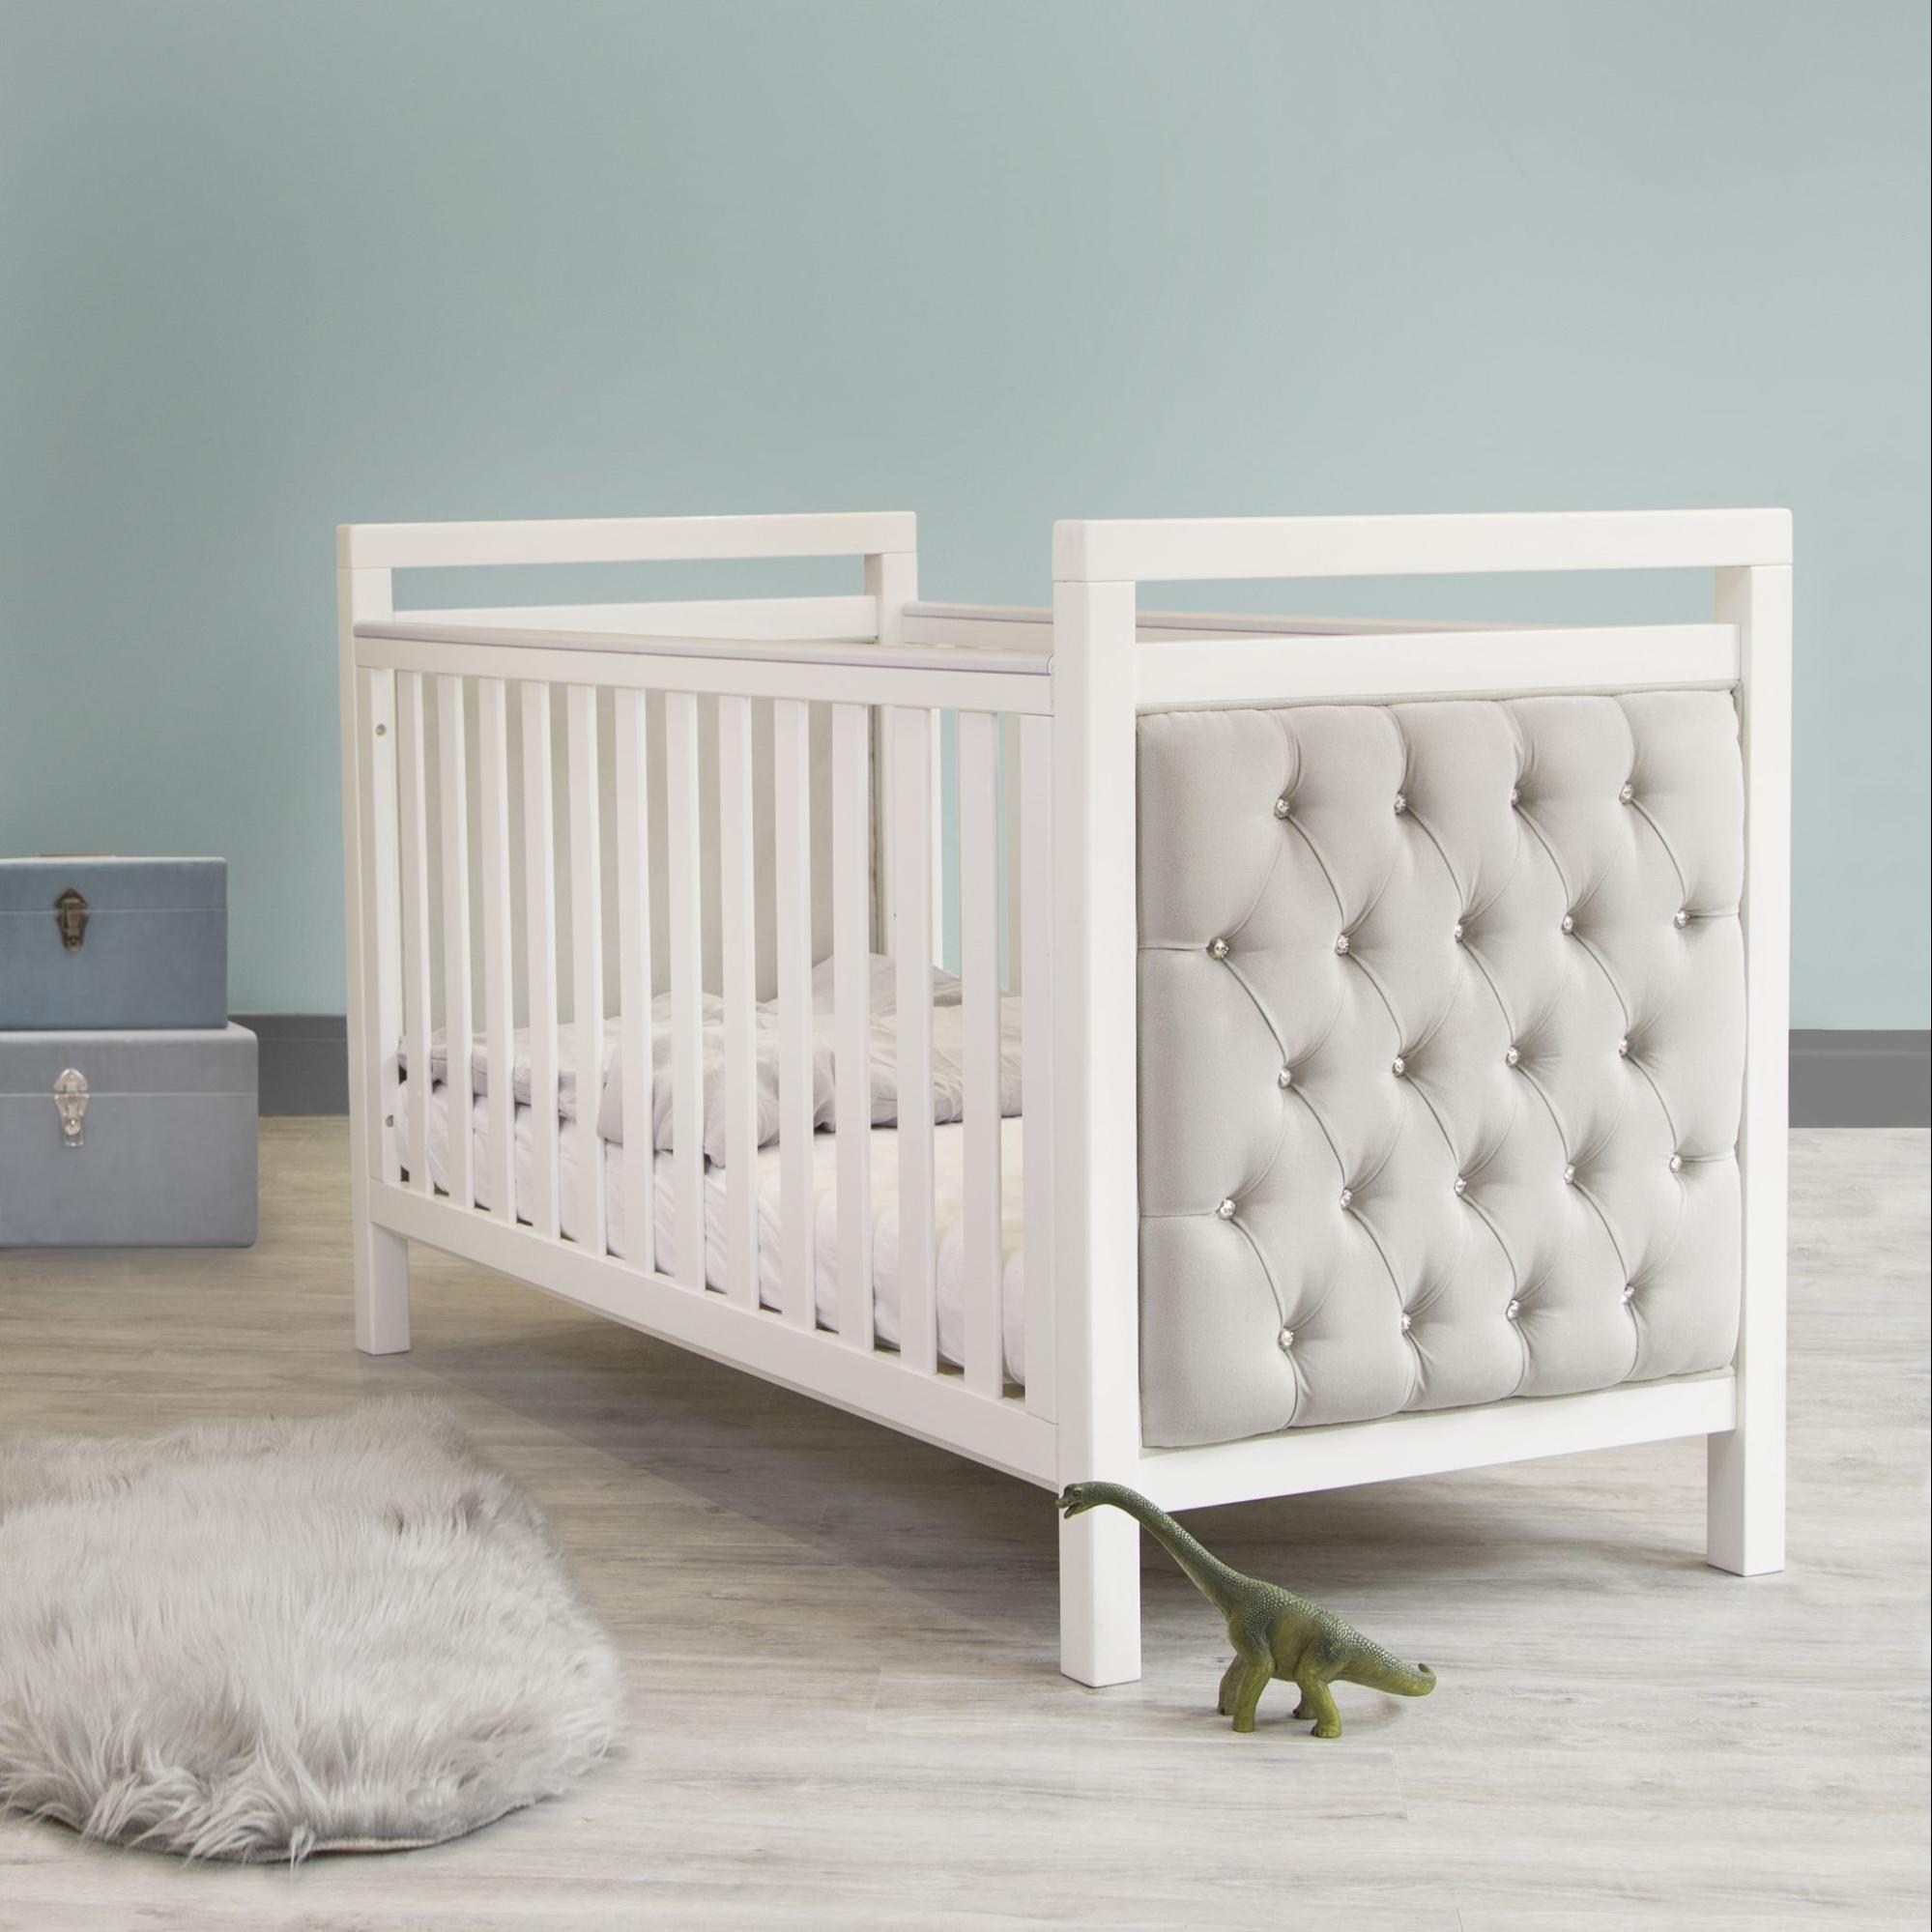 Elegant white travel crib in nursery room, a top baby shower gift idea